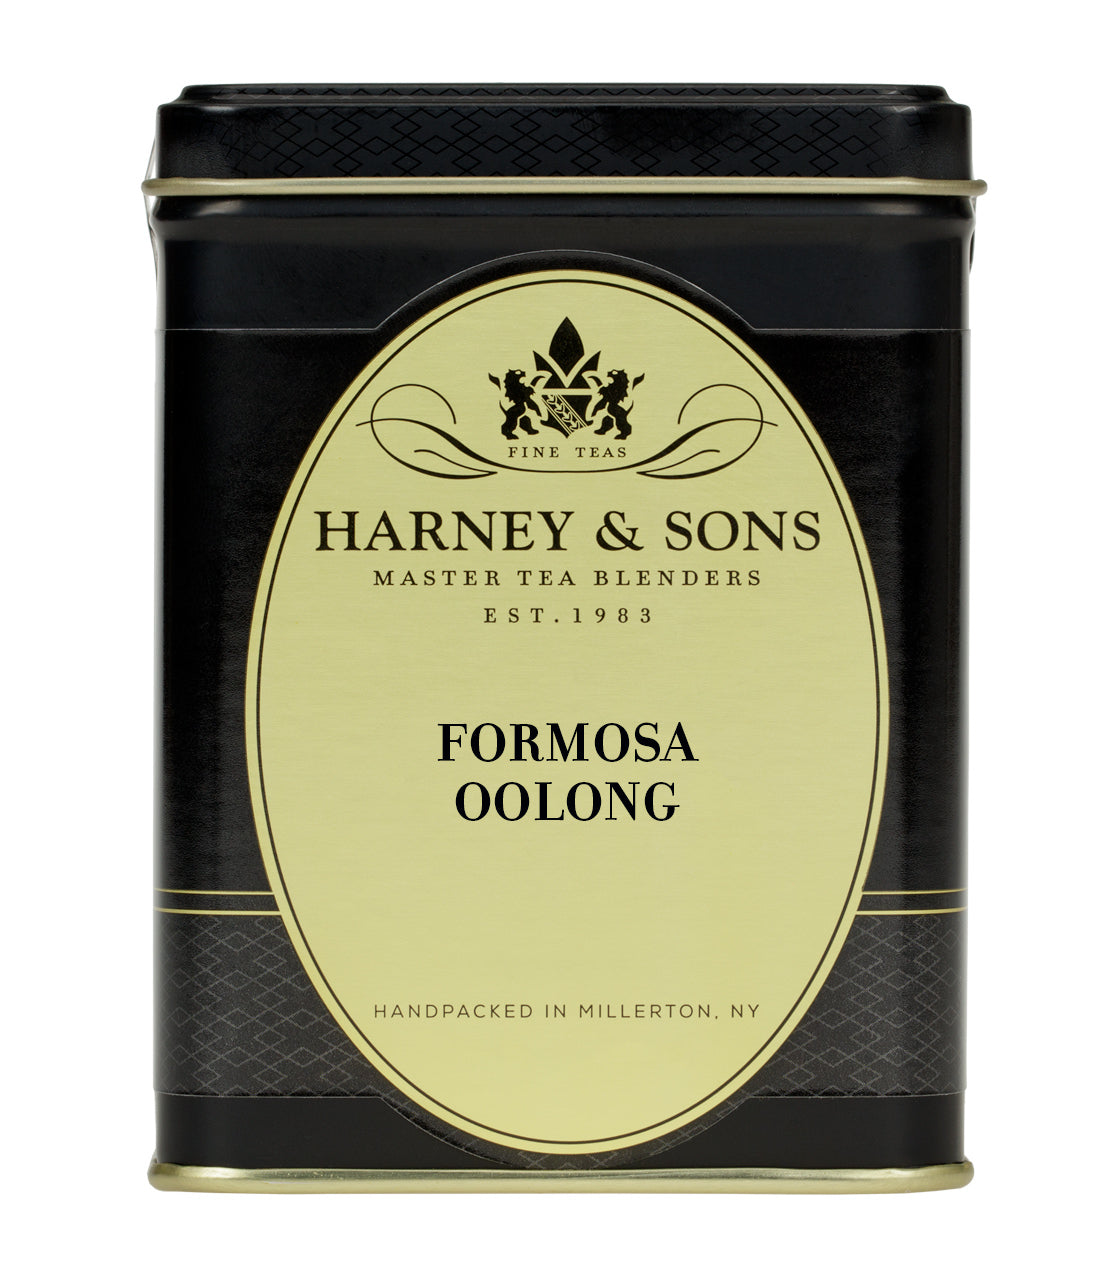 Formosa Oolong - Loose 5 oz. Tin - Harney & Sons Fine Teas